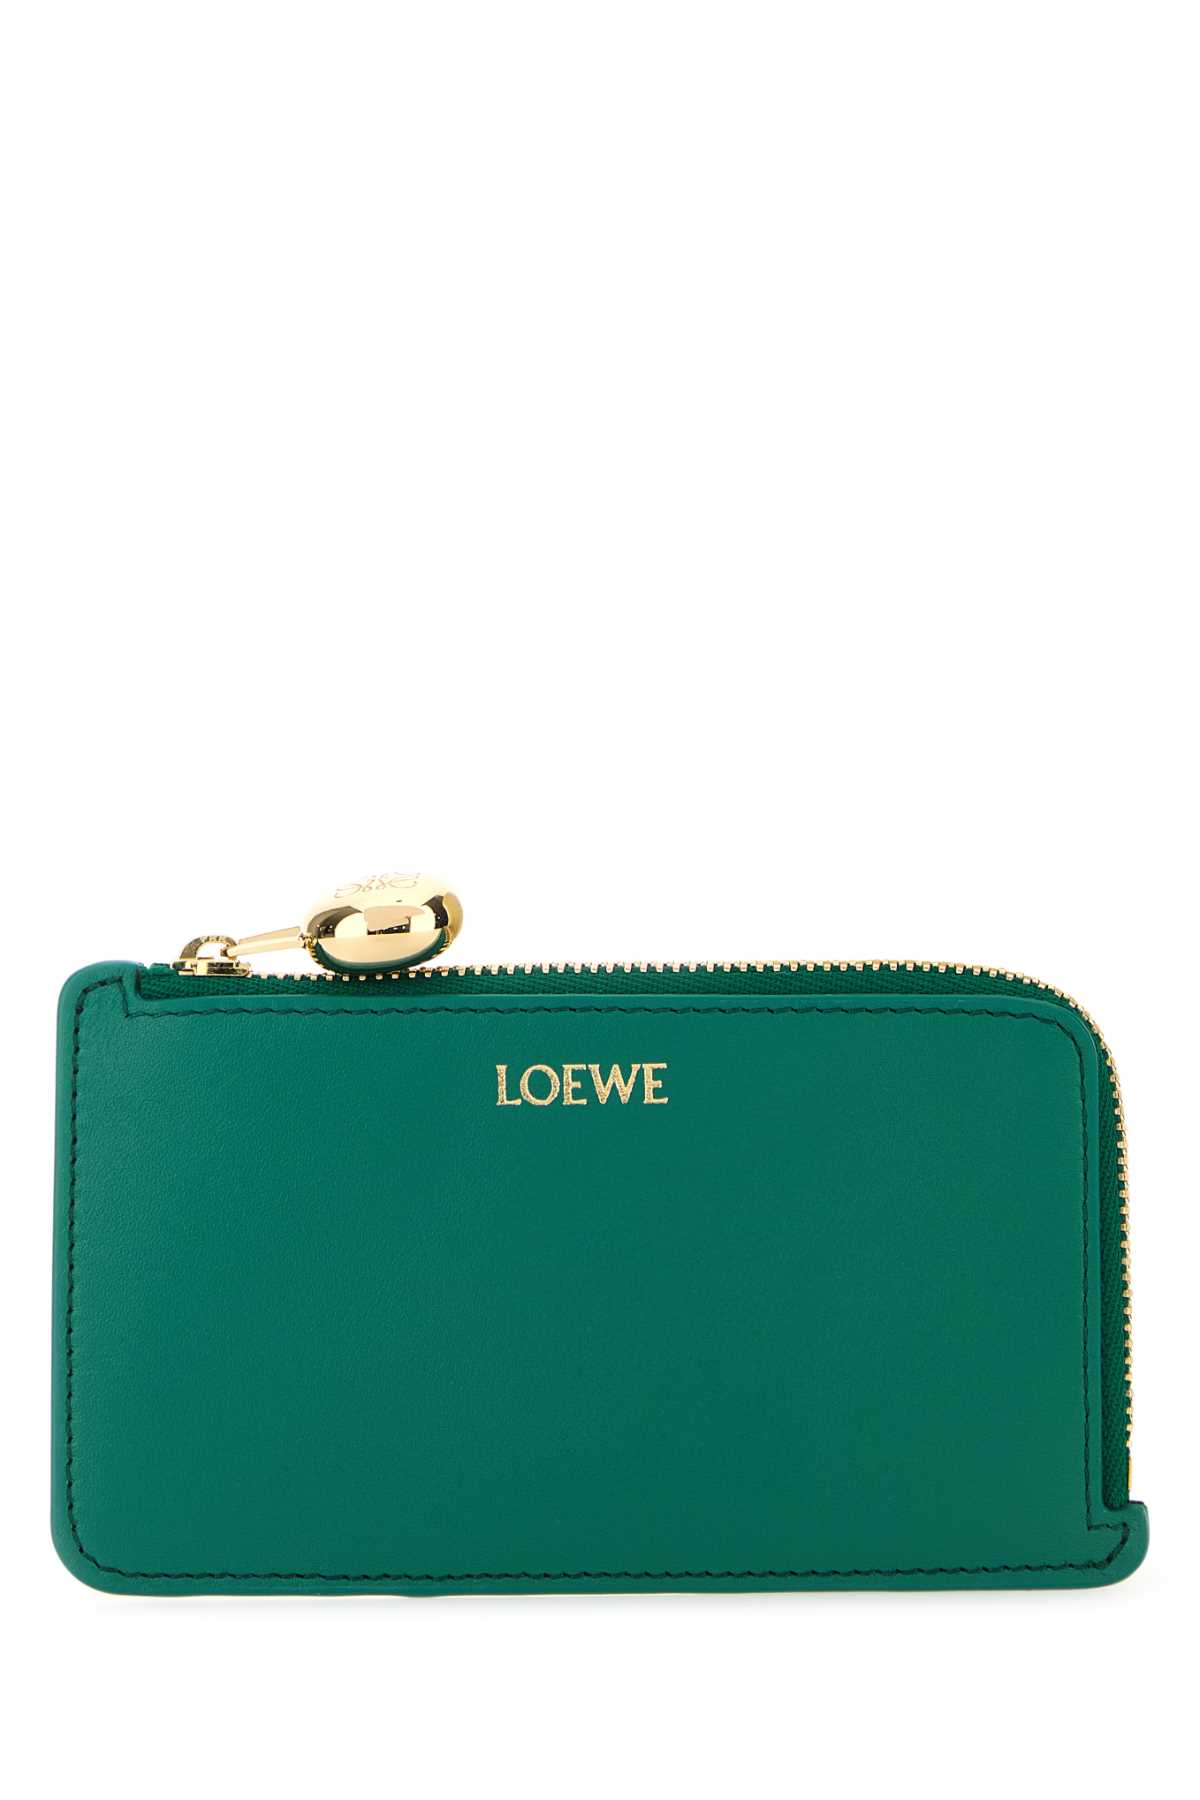 Loewe Emerald Green Leather Card Holder